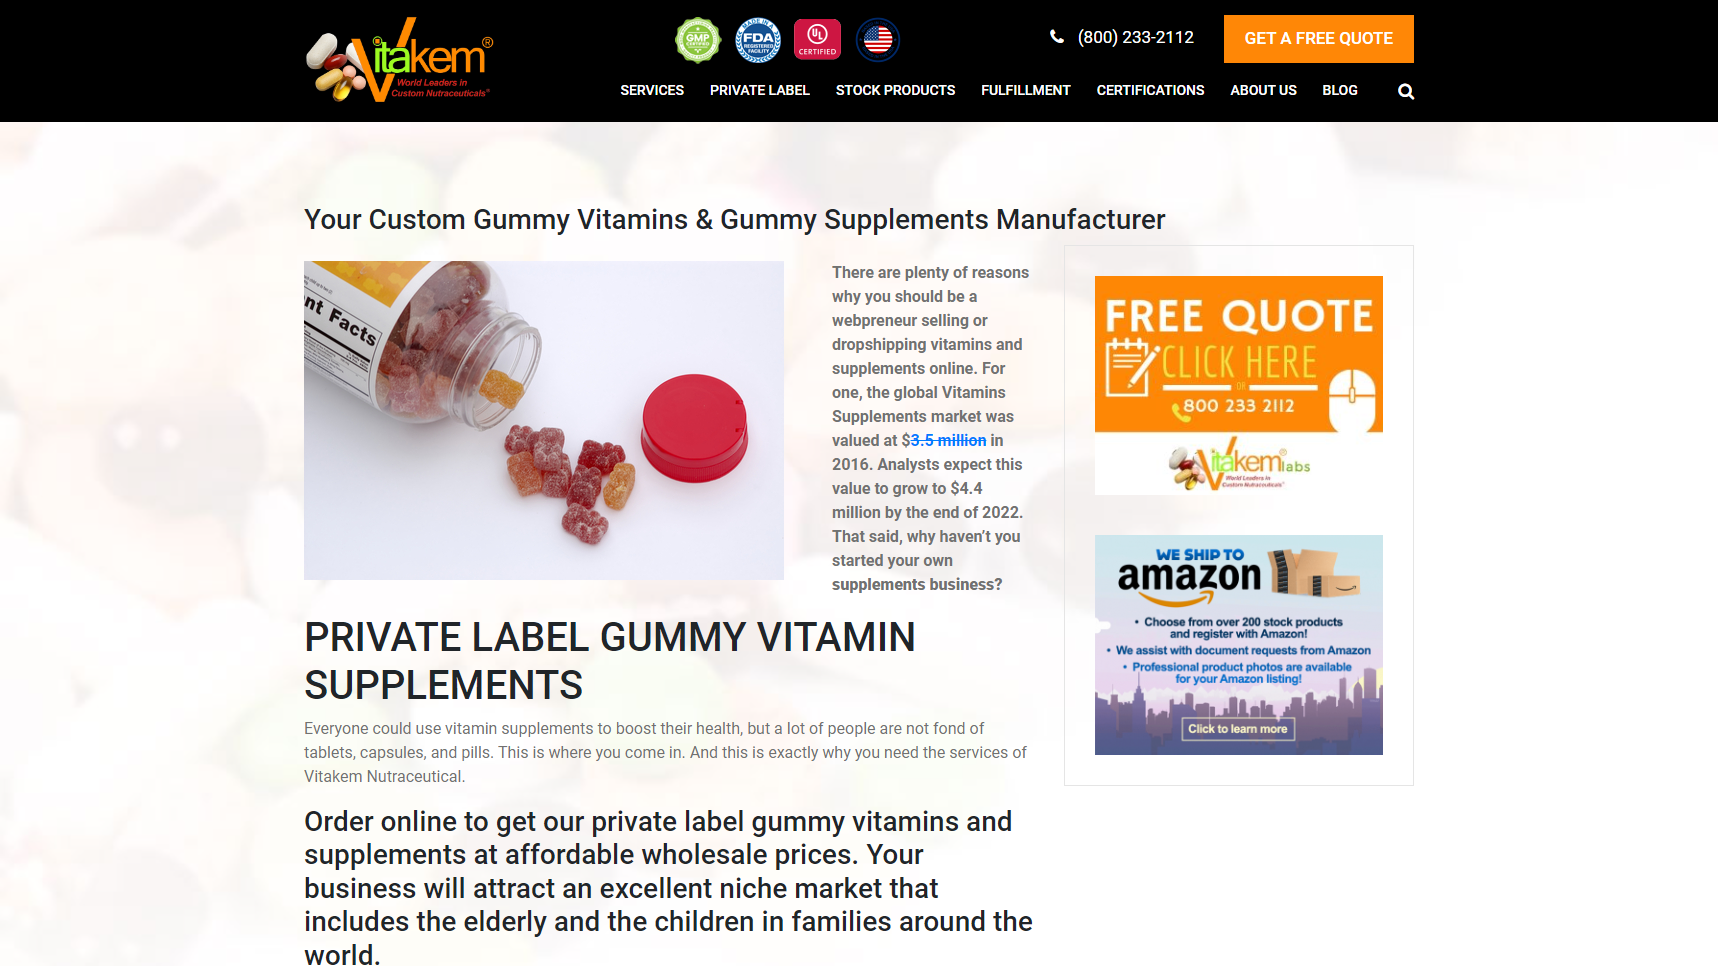 Vitakem - Gummy Vitamin Manufacturer